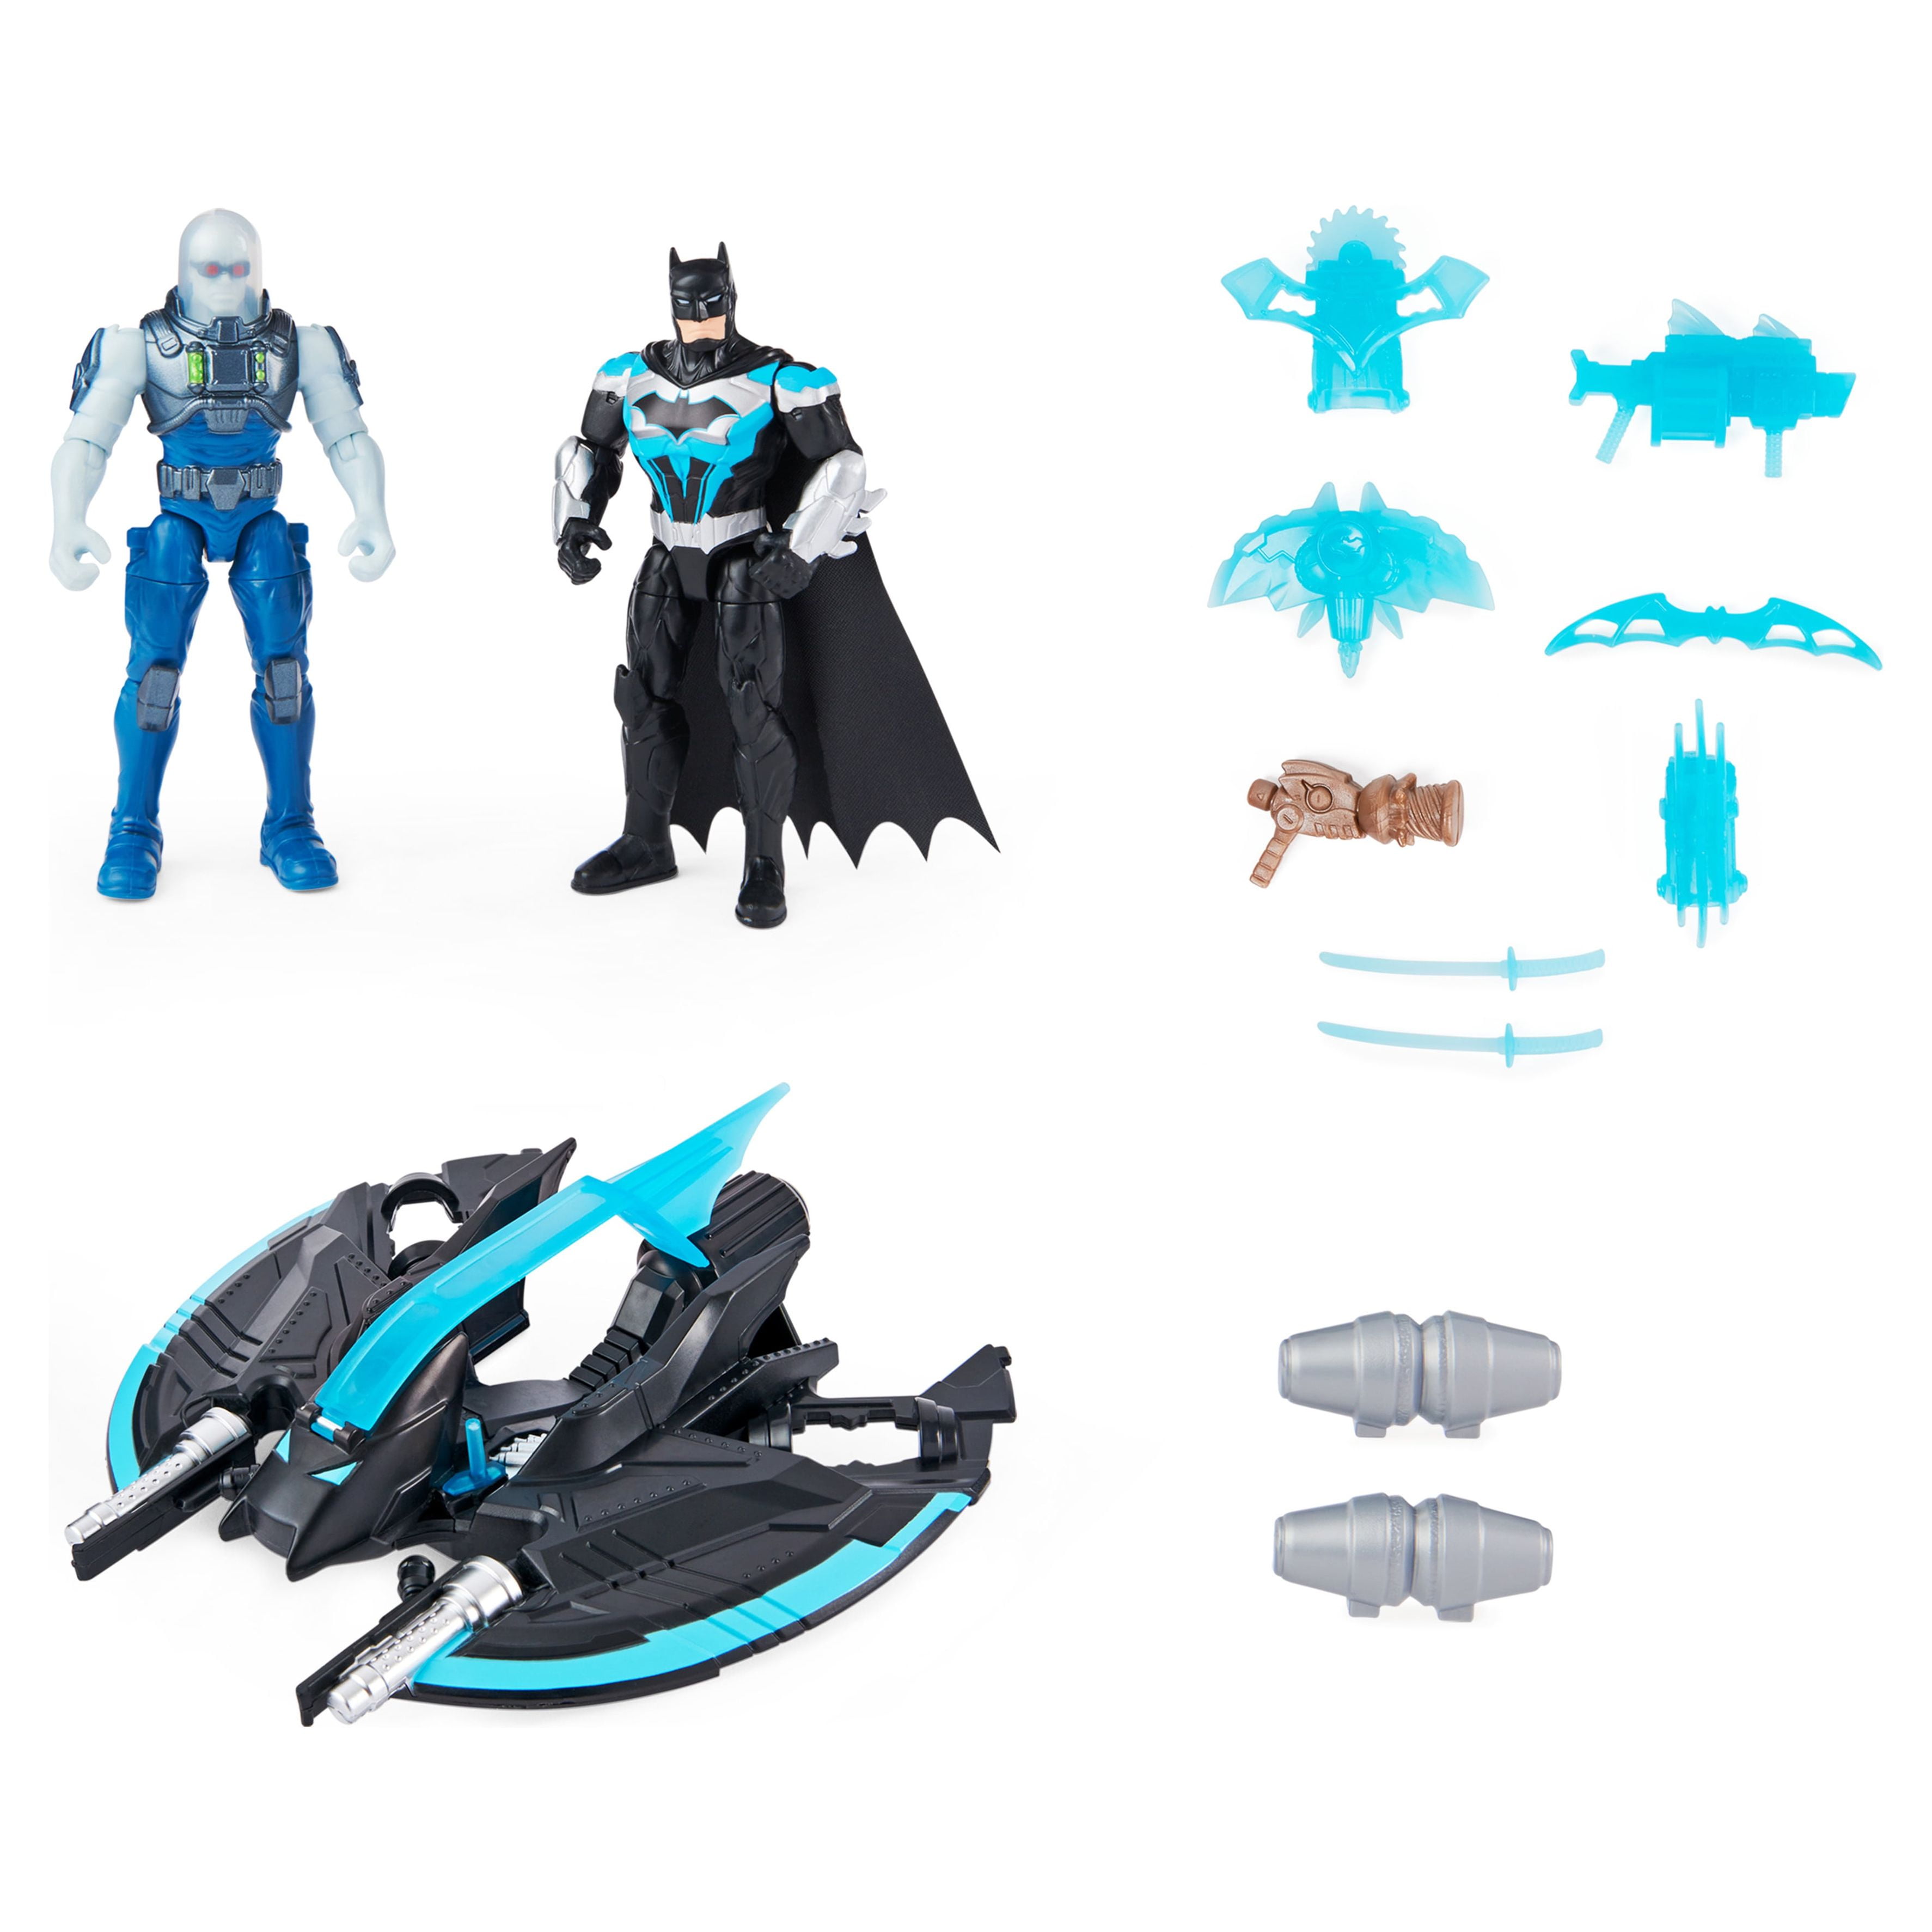 Batman Bat-Tech Flyer with 2 Action Figures and 10 Accessories